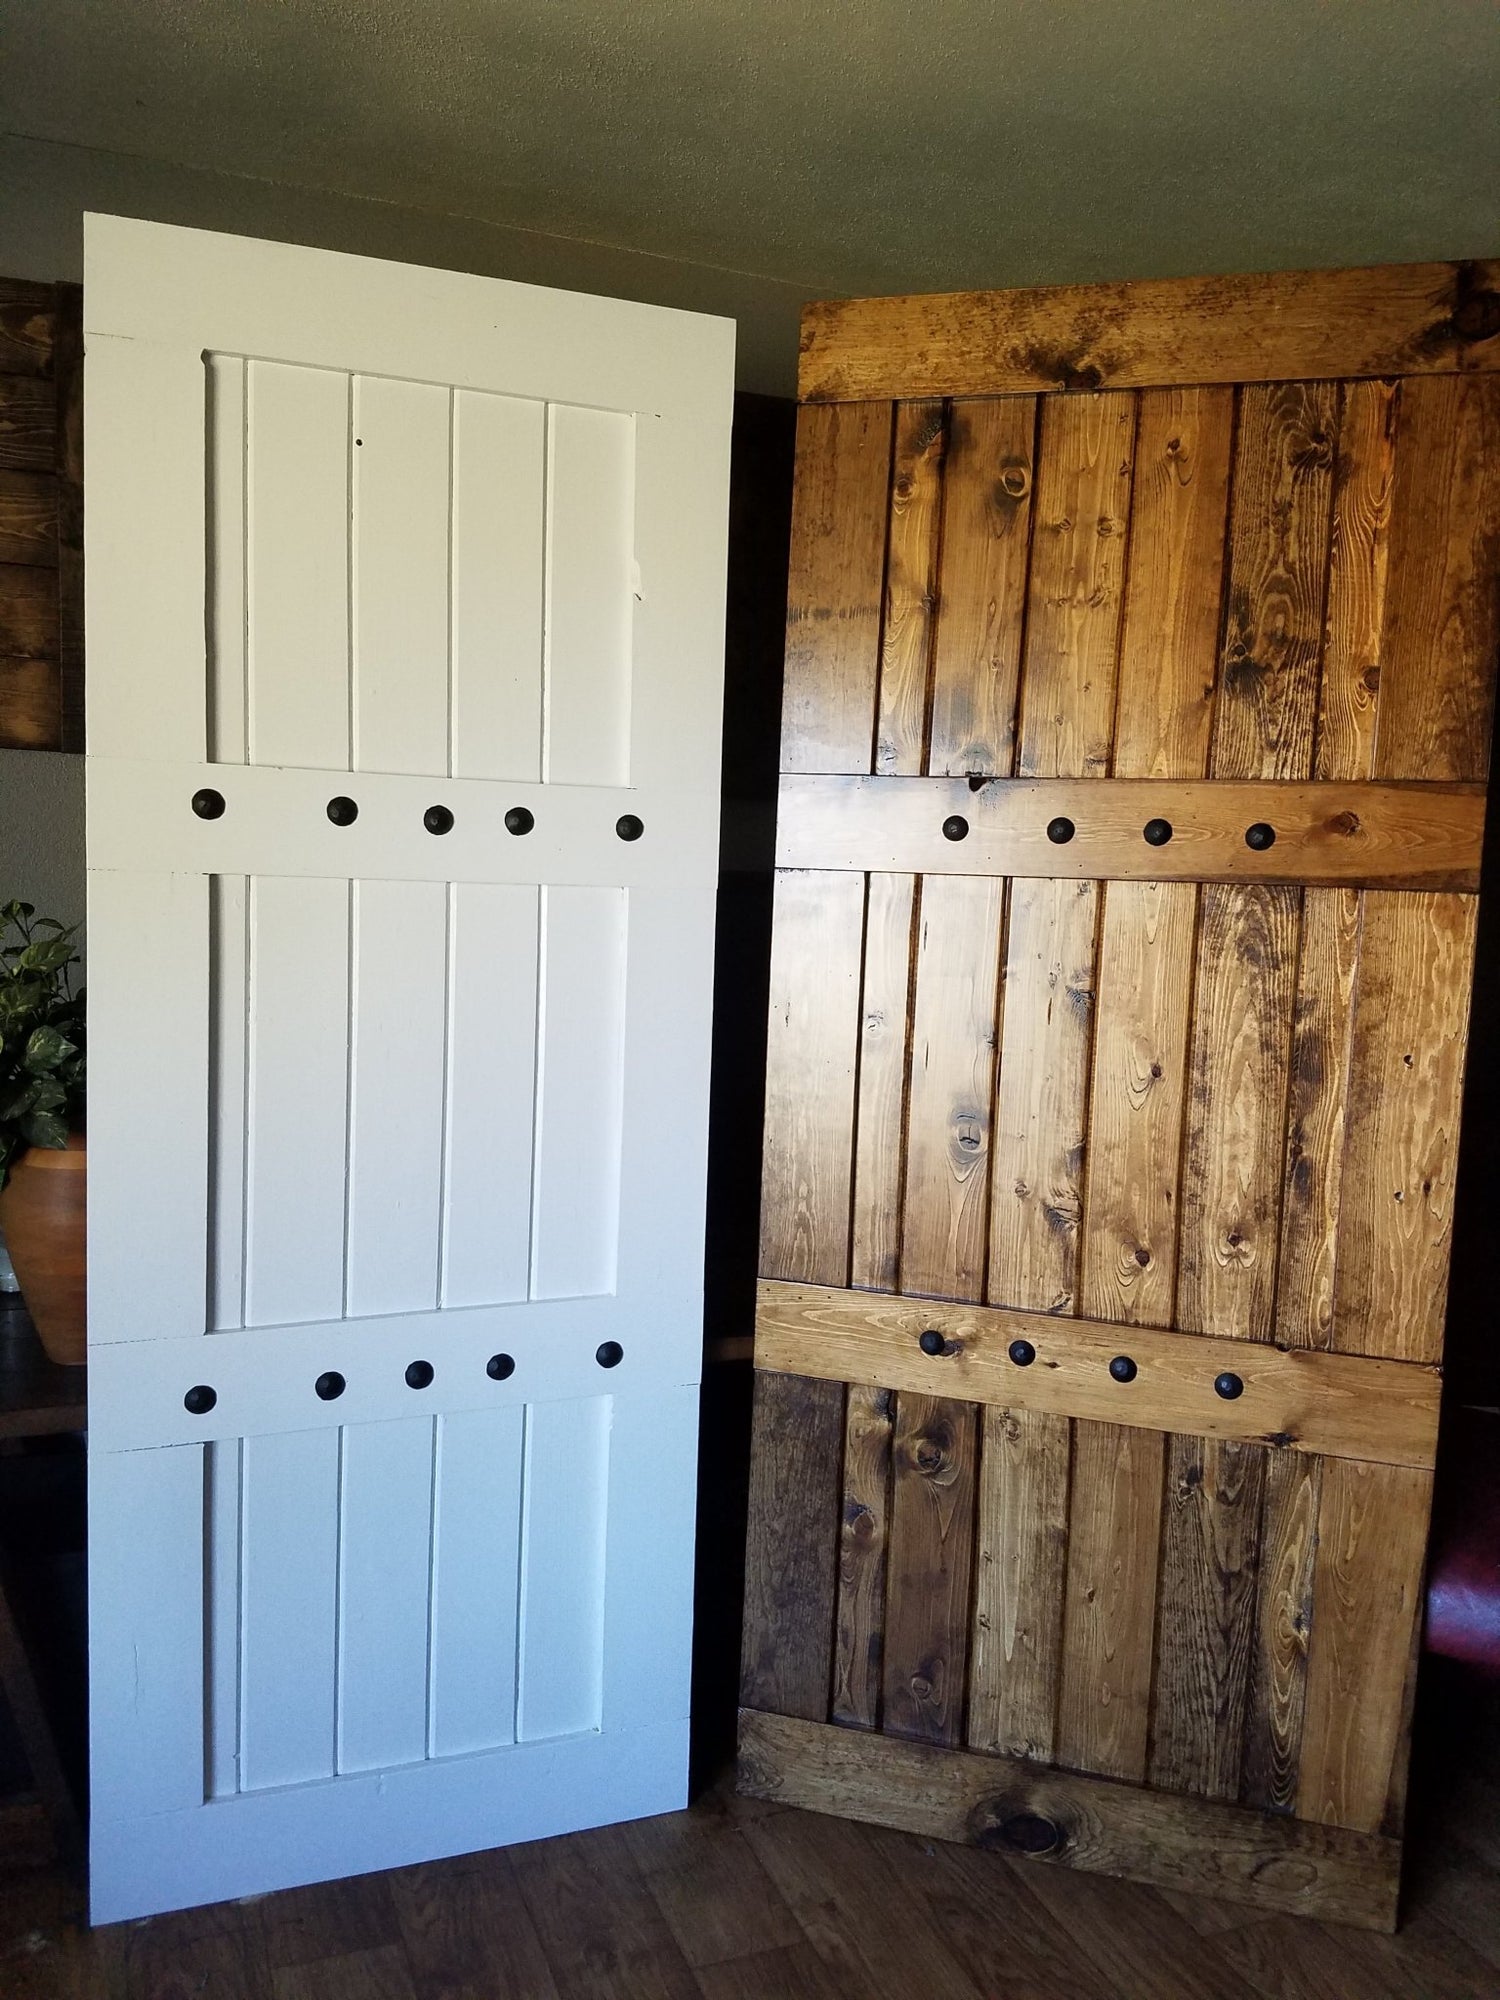 Custom Double Horizon Barn Door with distinctive wood panels and handle cutouts